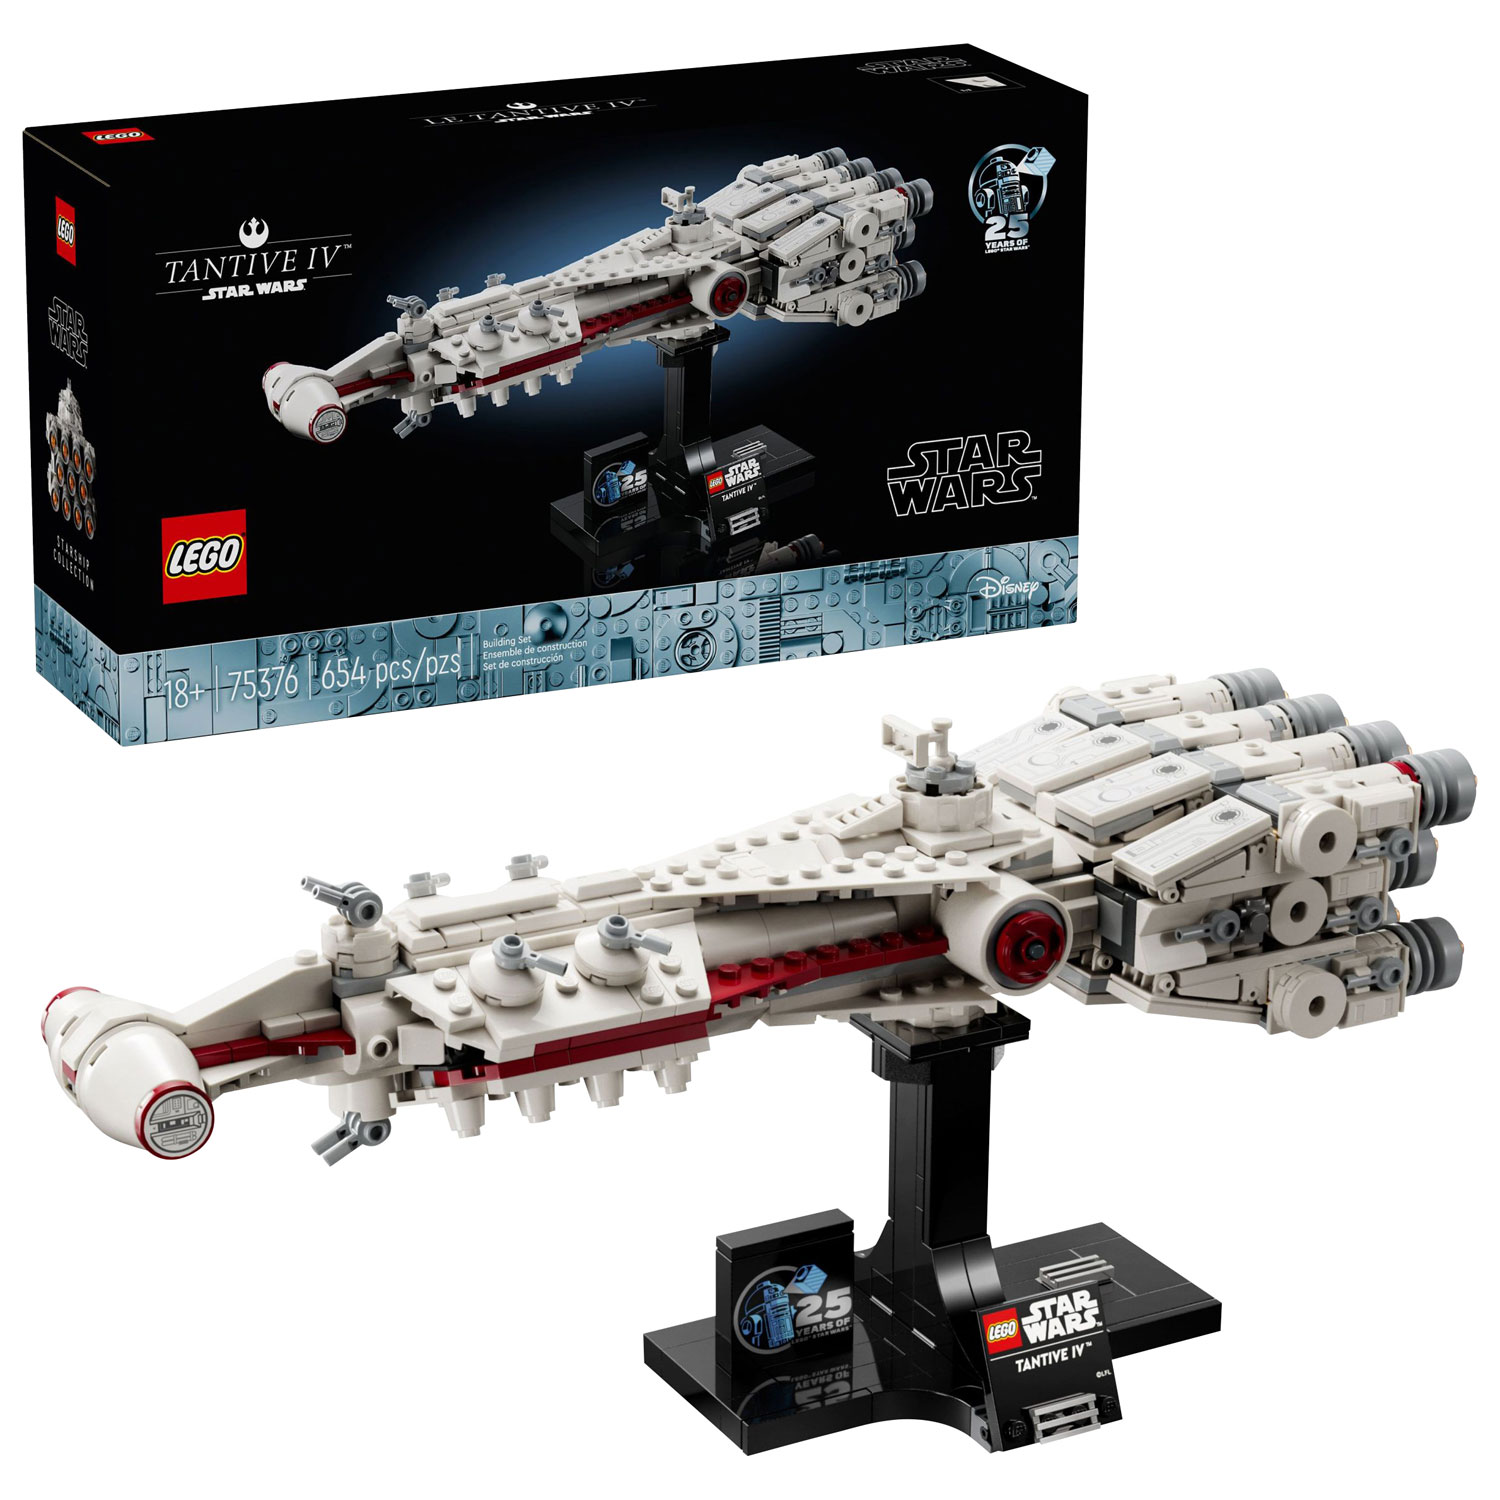 LEGO Star Wars: Tantive IV Starship - 654 Pieces (75376)